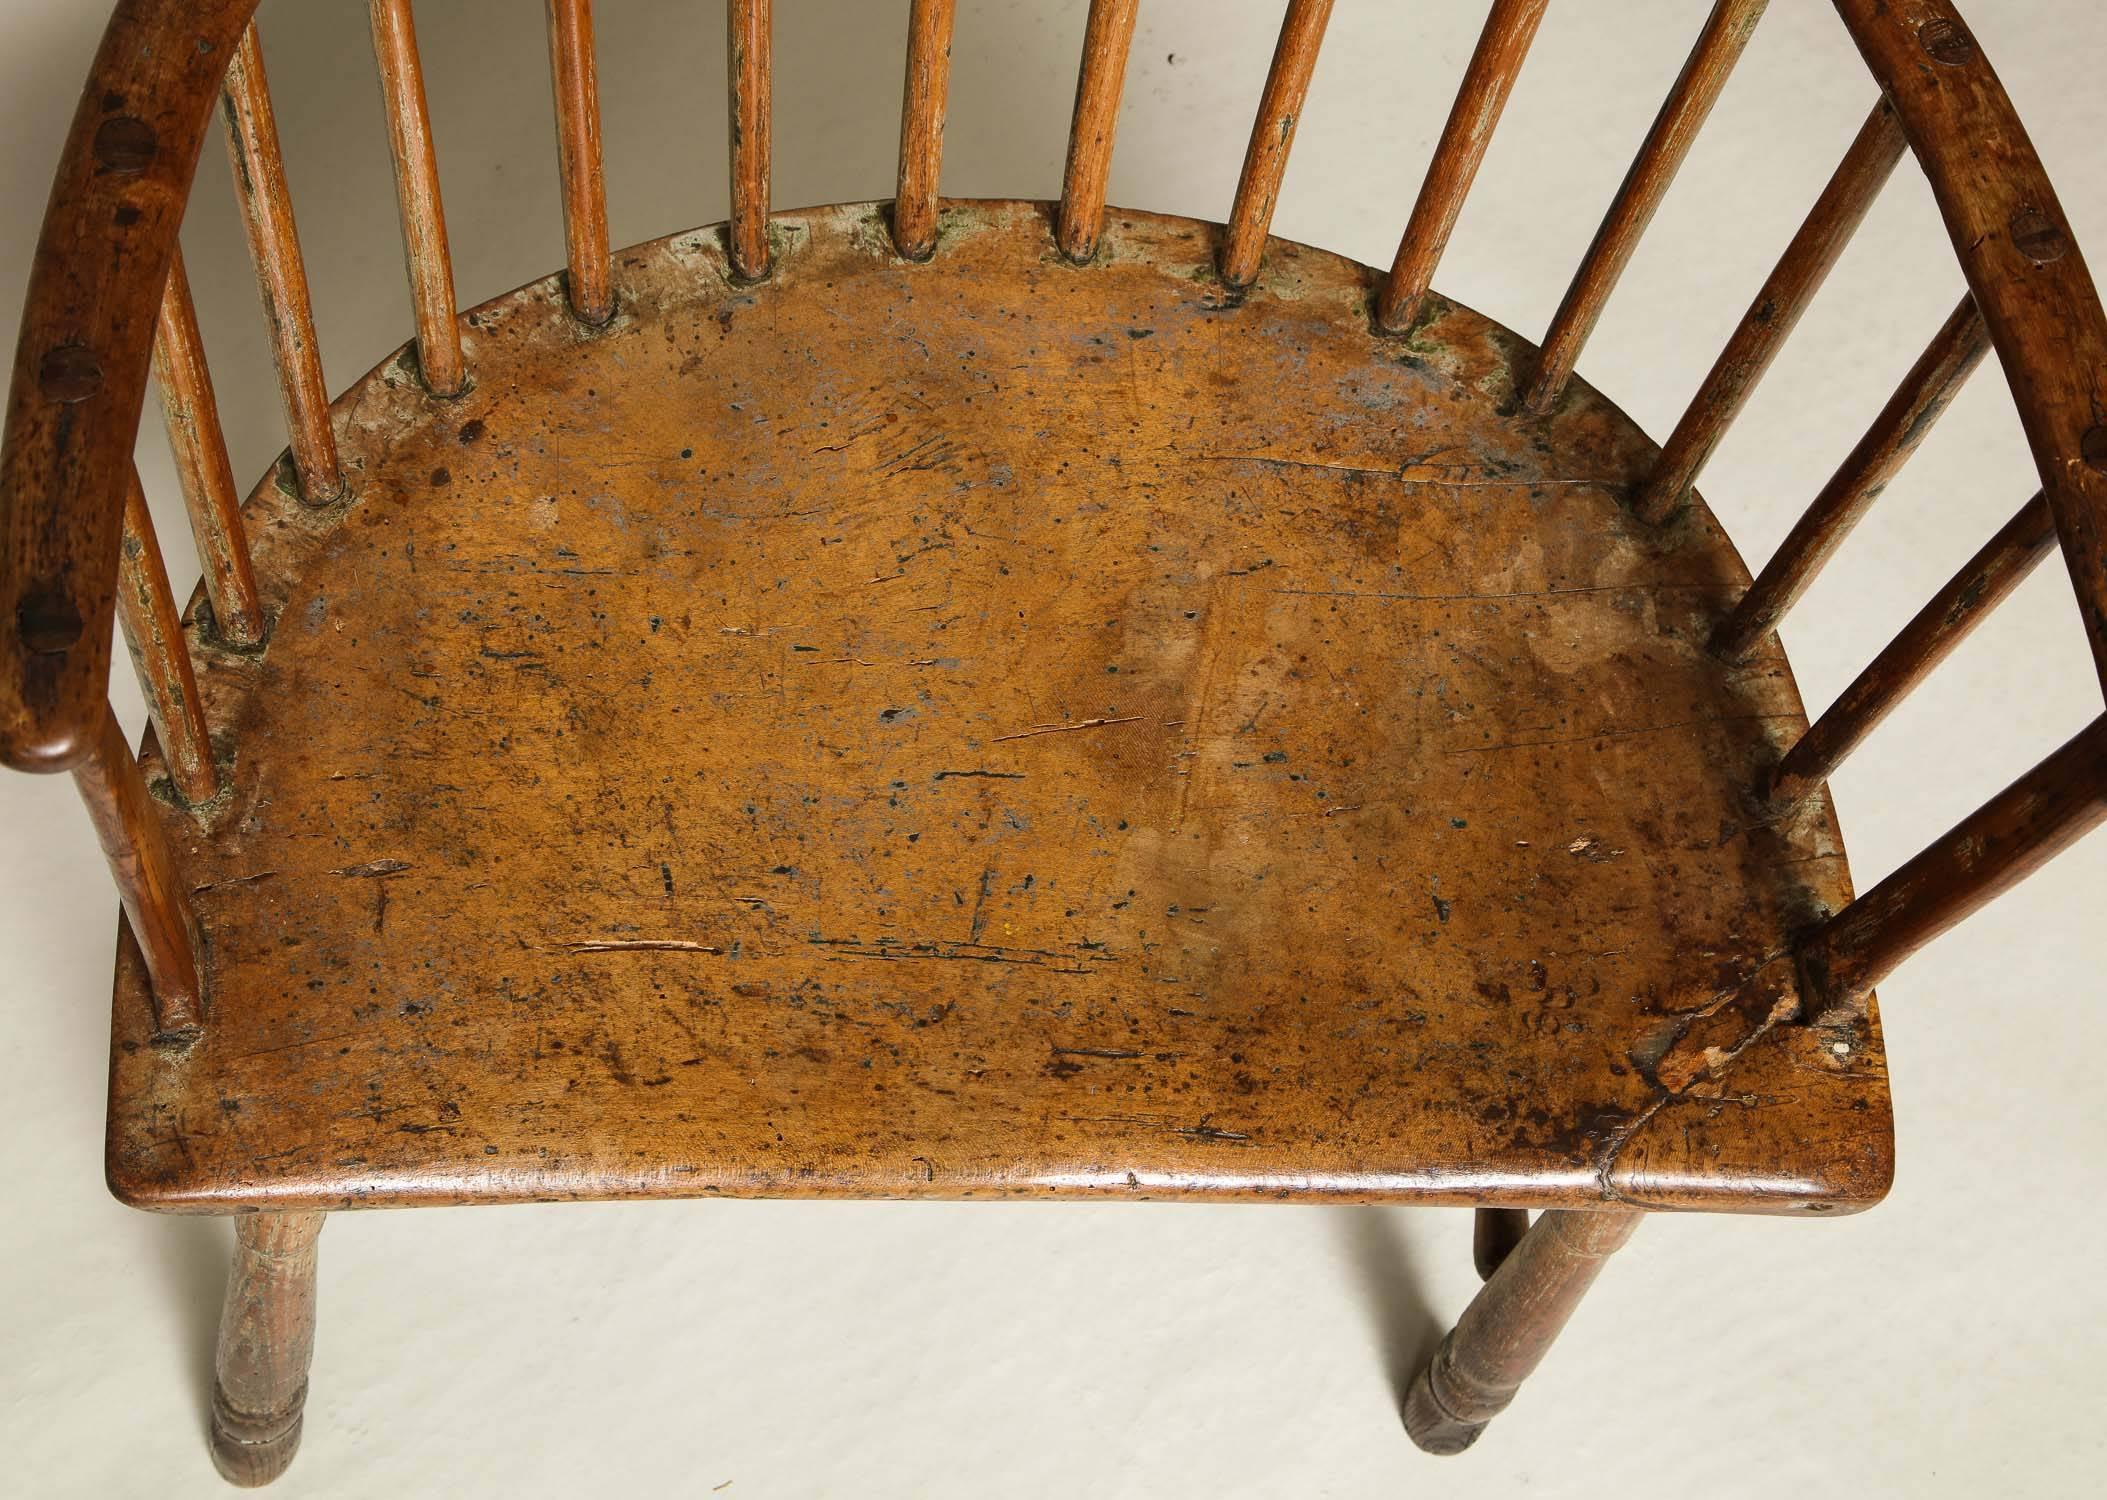 18th century windsor chair